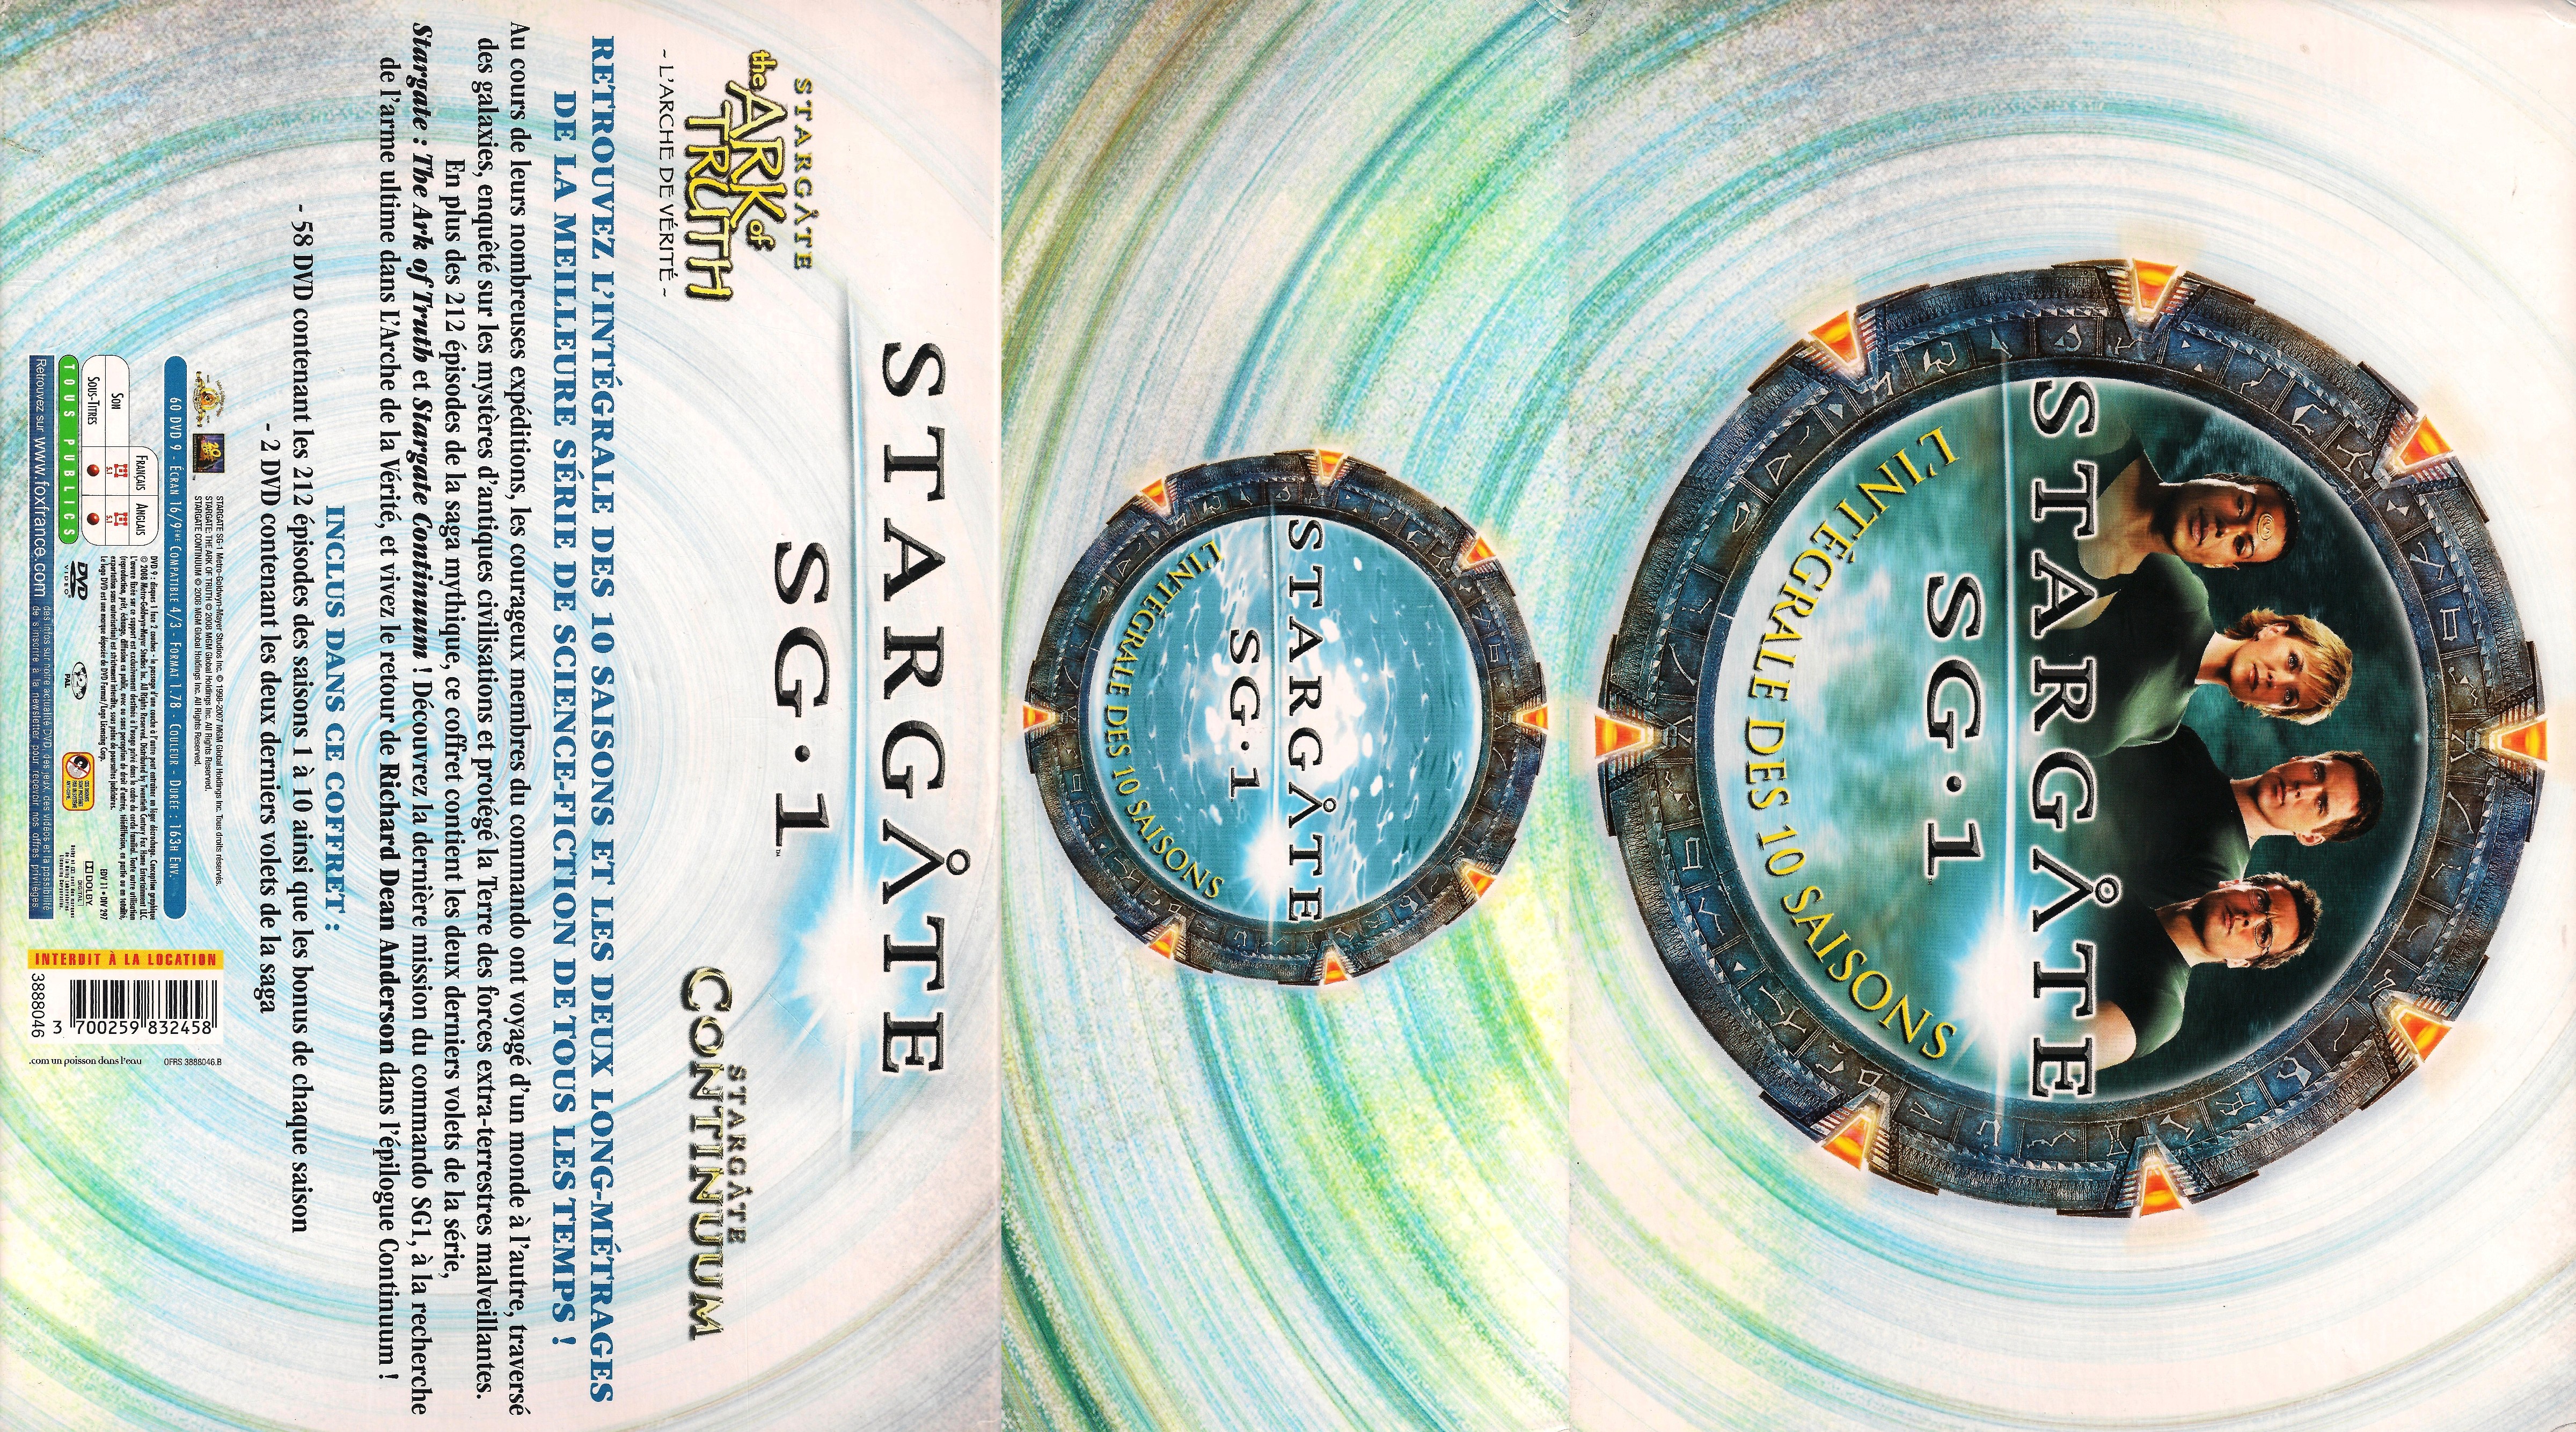 Jaquette DVD Stargate SG-1 Integrale COFFRET